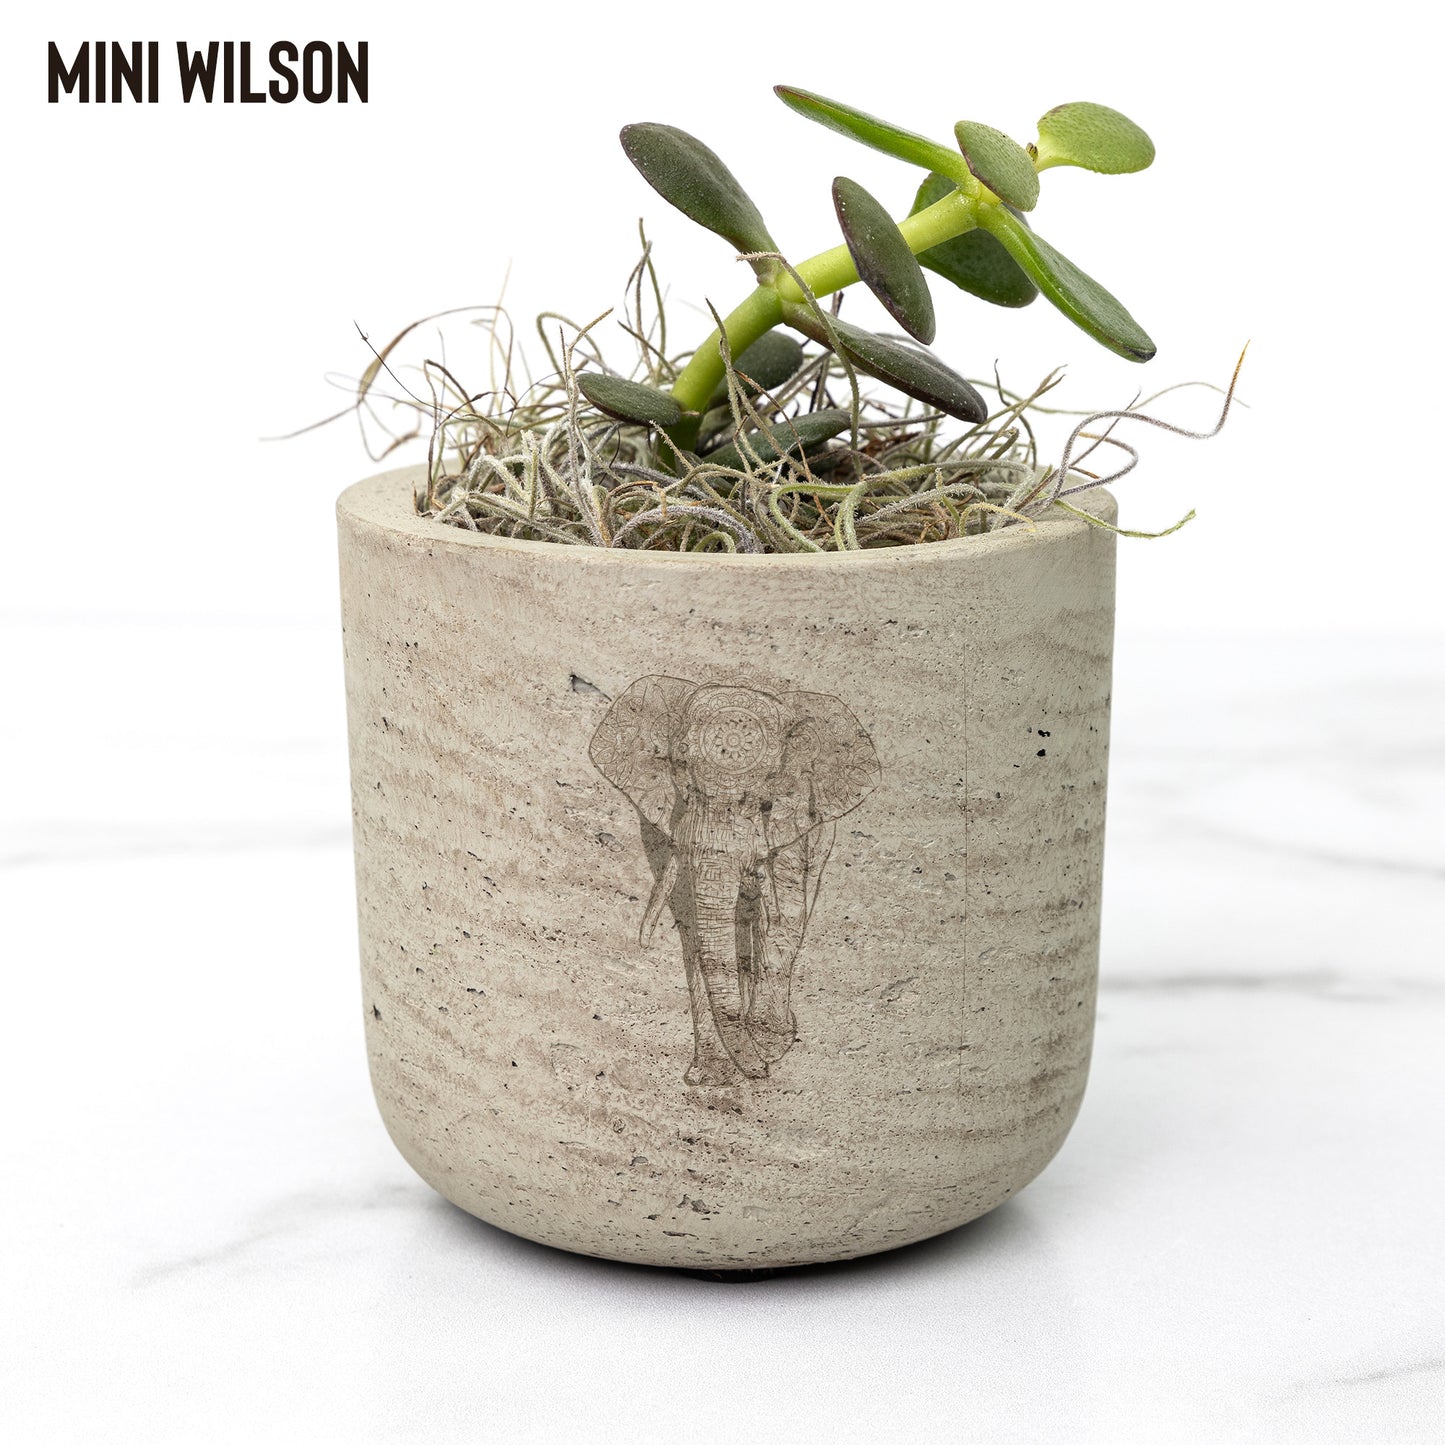 Bestselling Desk Plants with Mandala Elephant Design | Bold African Elephant on a Plant Vase | Recycled Pots